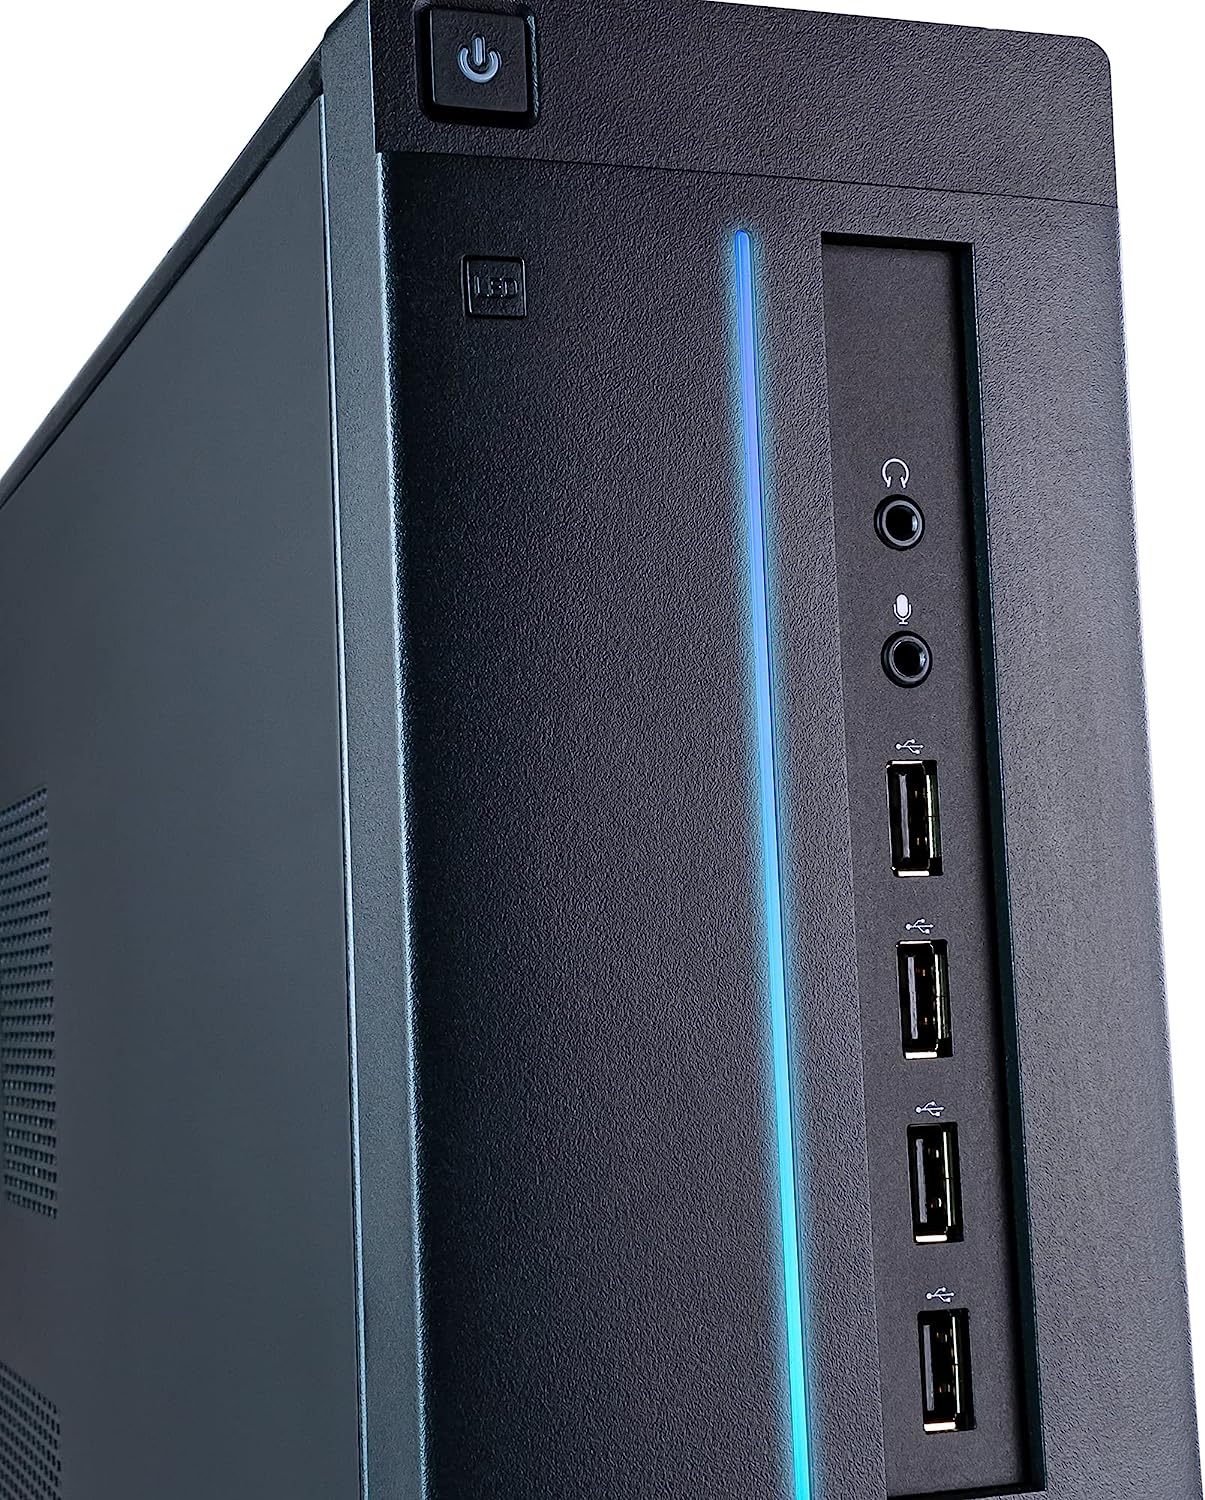 Dell OptiPlex Computer Desktop PC, Intel Core i5 3rd Gen 3.2 GHz, 16GB RAM, 2TB HDD, New 22 Inch LED Monitor, RGB Keyboard and Mouse, WiFi, Windows 10 Pro (Renewed)